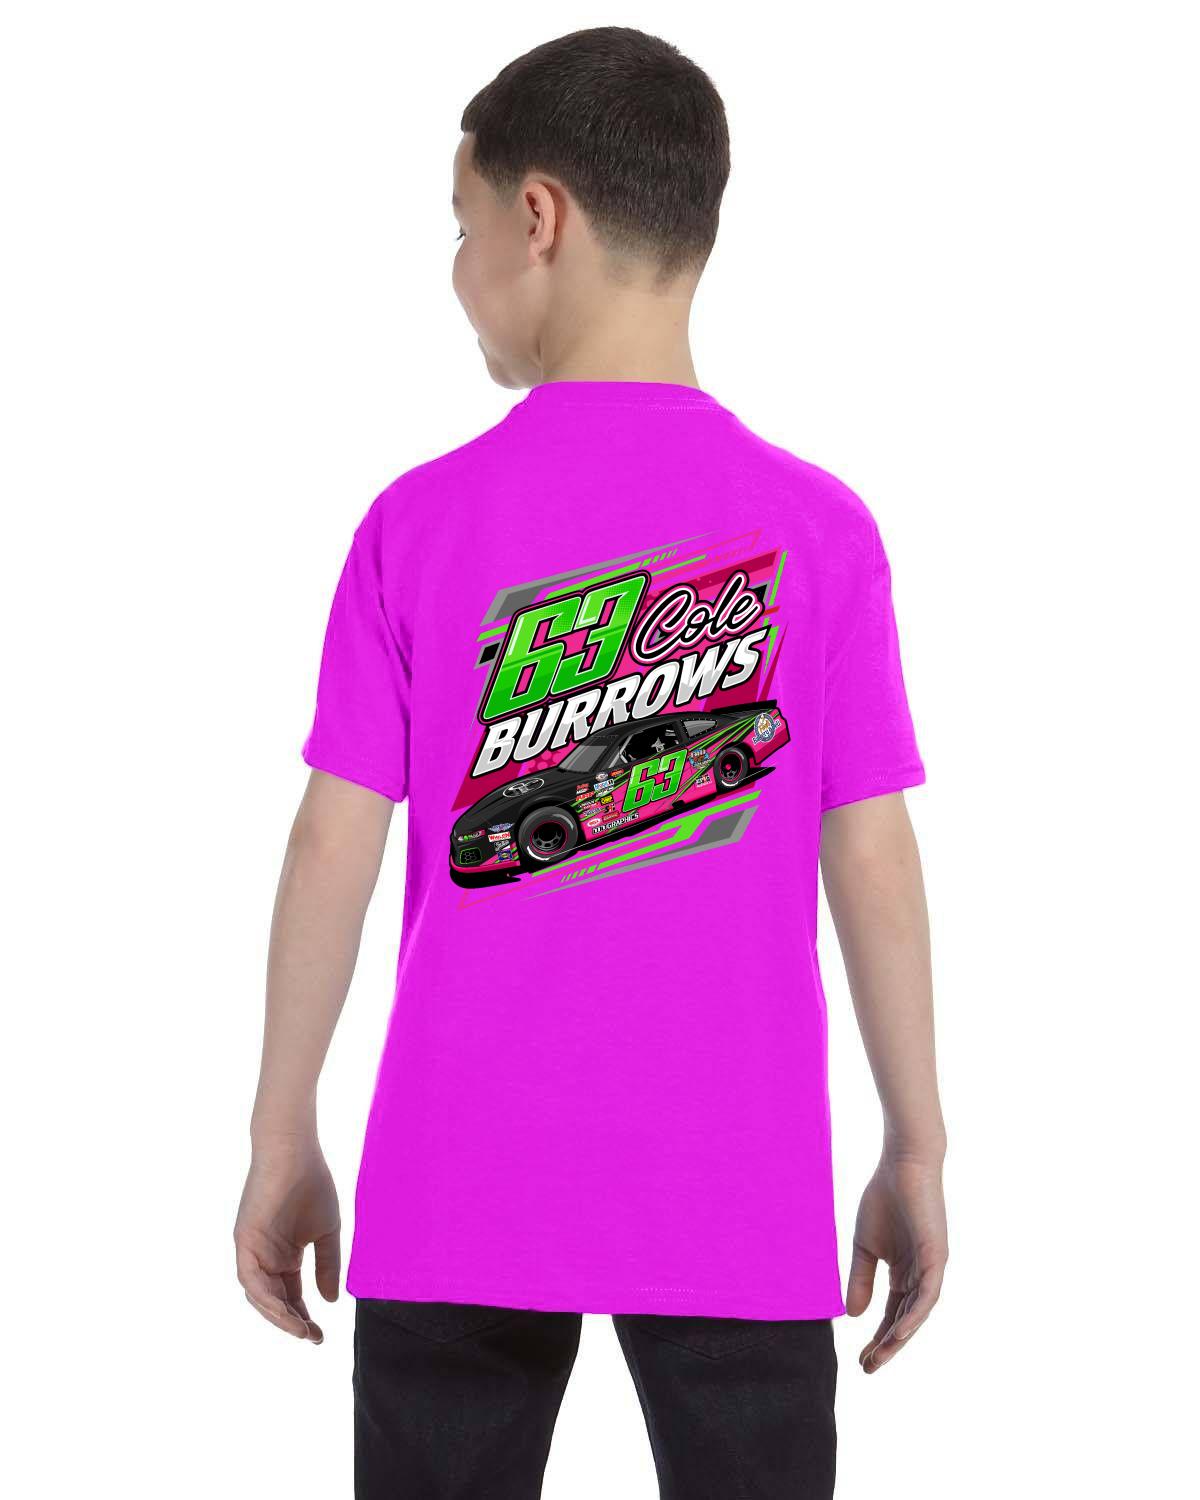 Cole Burrows Racing Youth T-Shirt